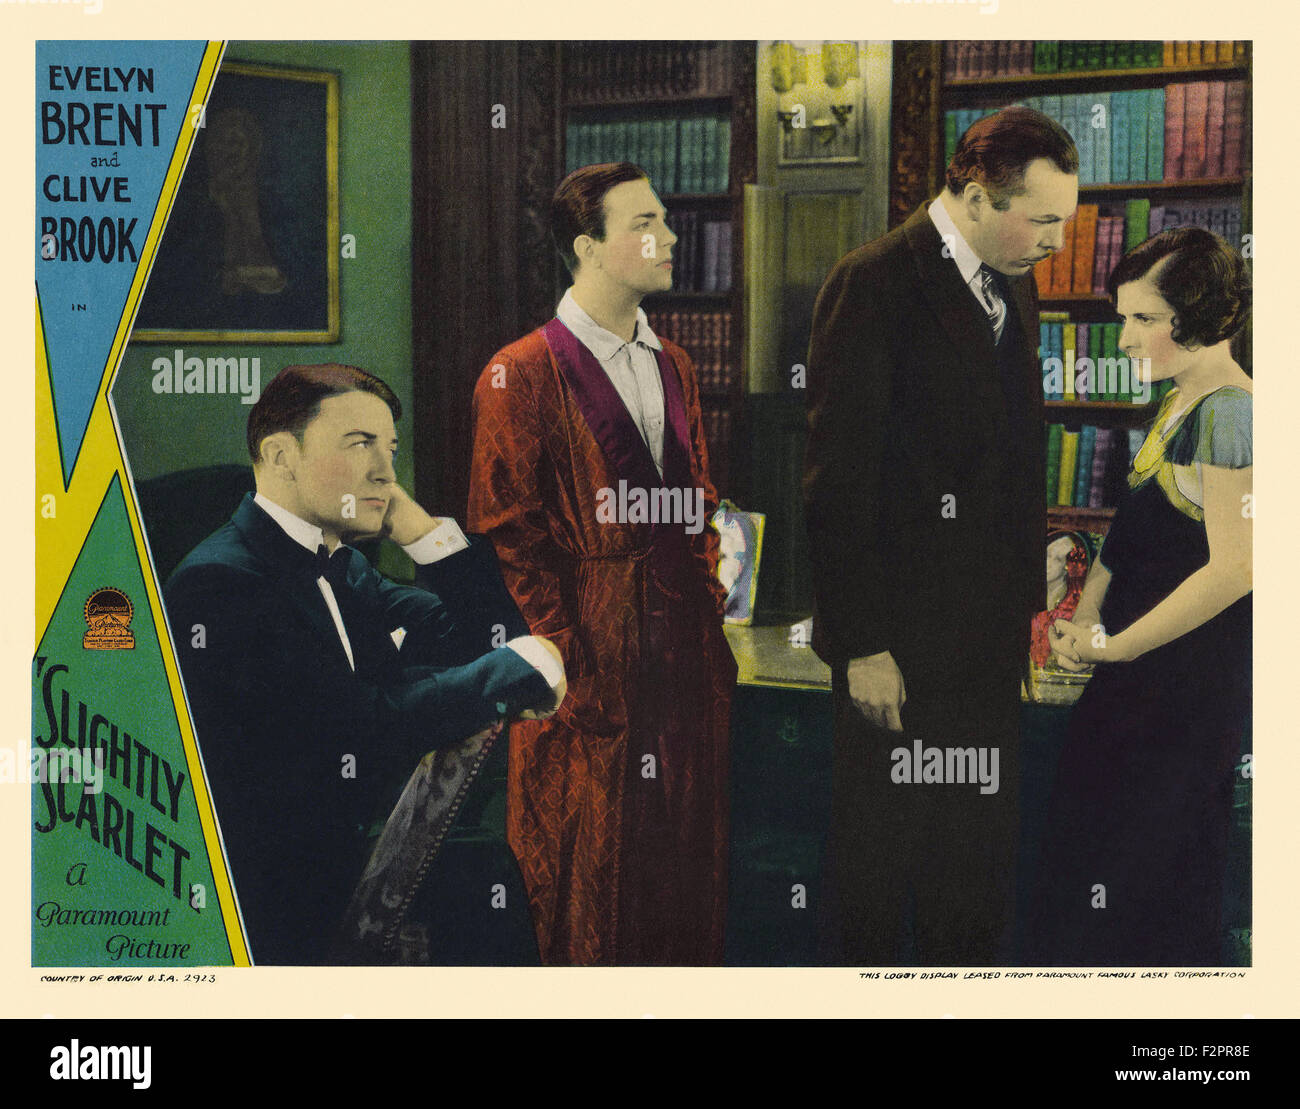 Slightly Scarlet (1930) - Movie Poster Stock Photo - Alamy